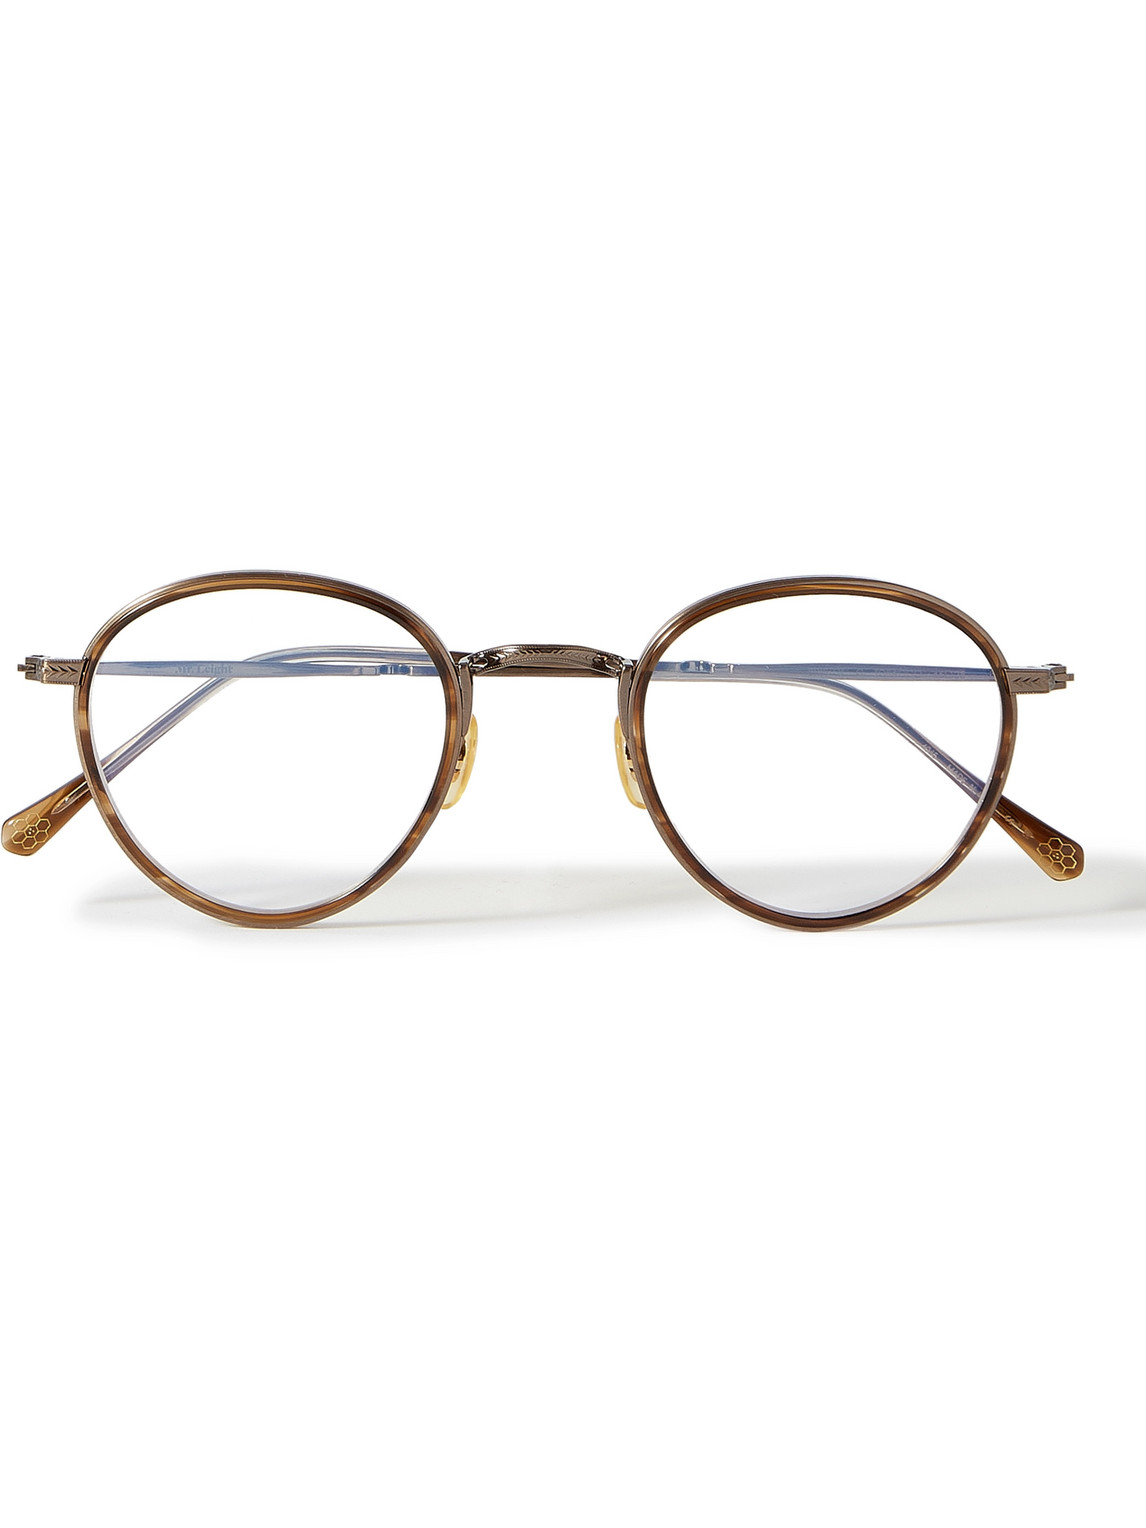 Mr Leight Bristol C Round-Frame Antiqued Gold-Tone Optical Glasses